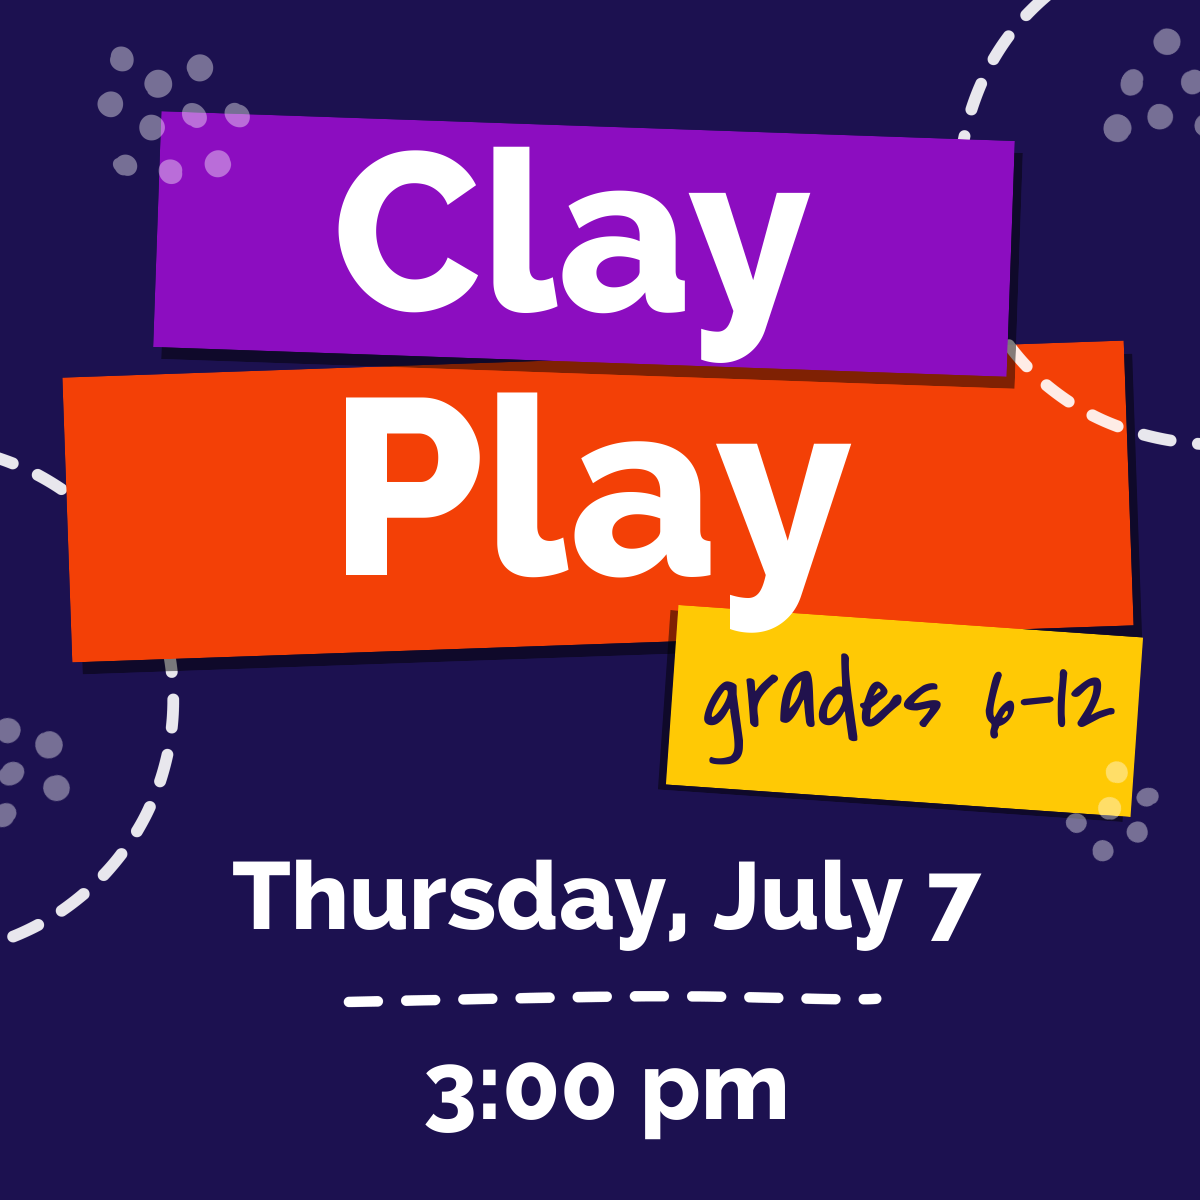 Clay Play grades 6-12 Thursday, July 7 3:00pm